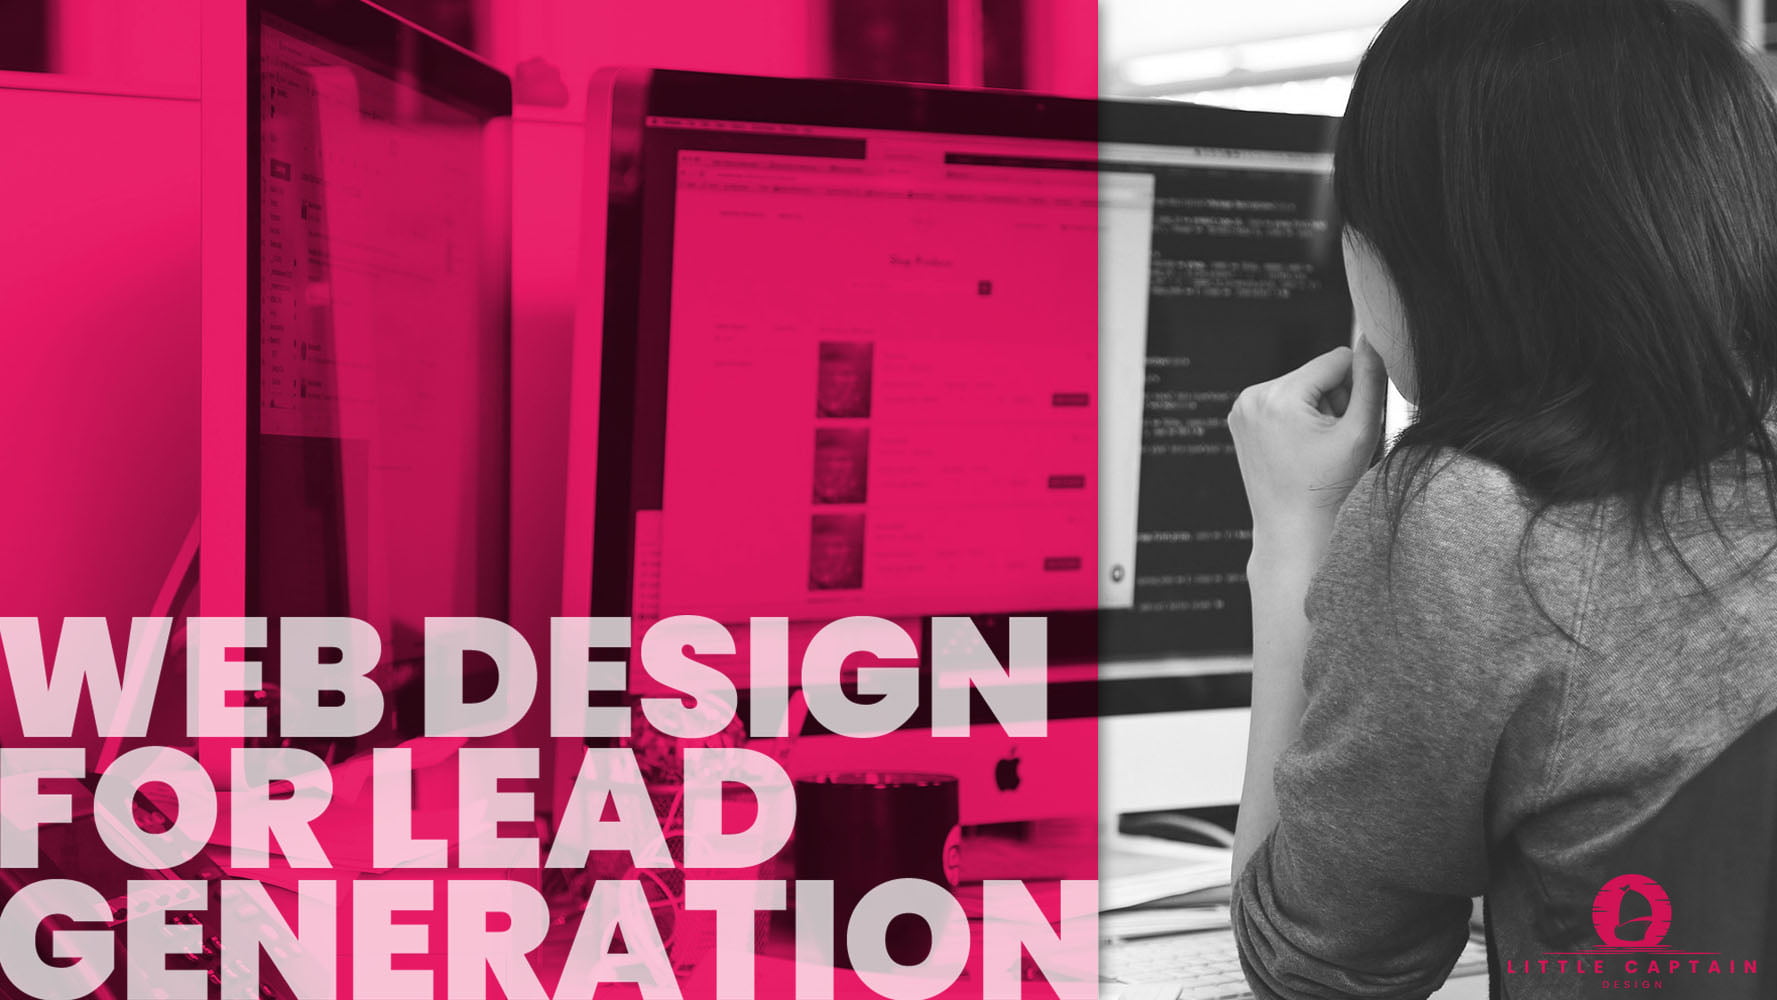 Web Design for Lead Generation